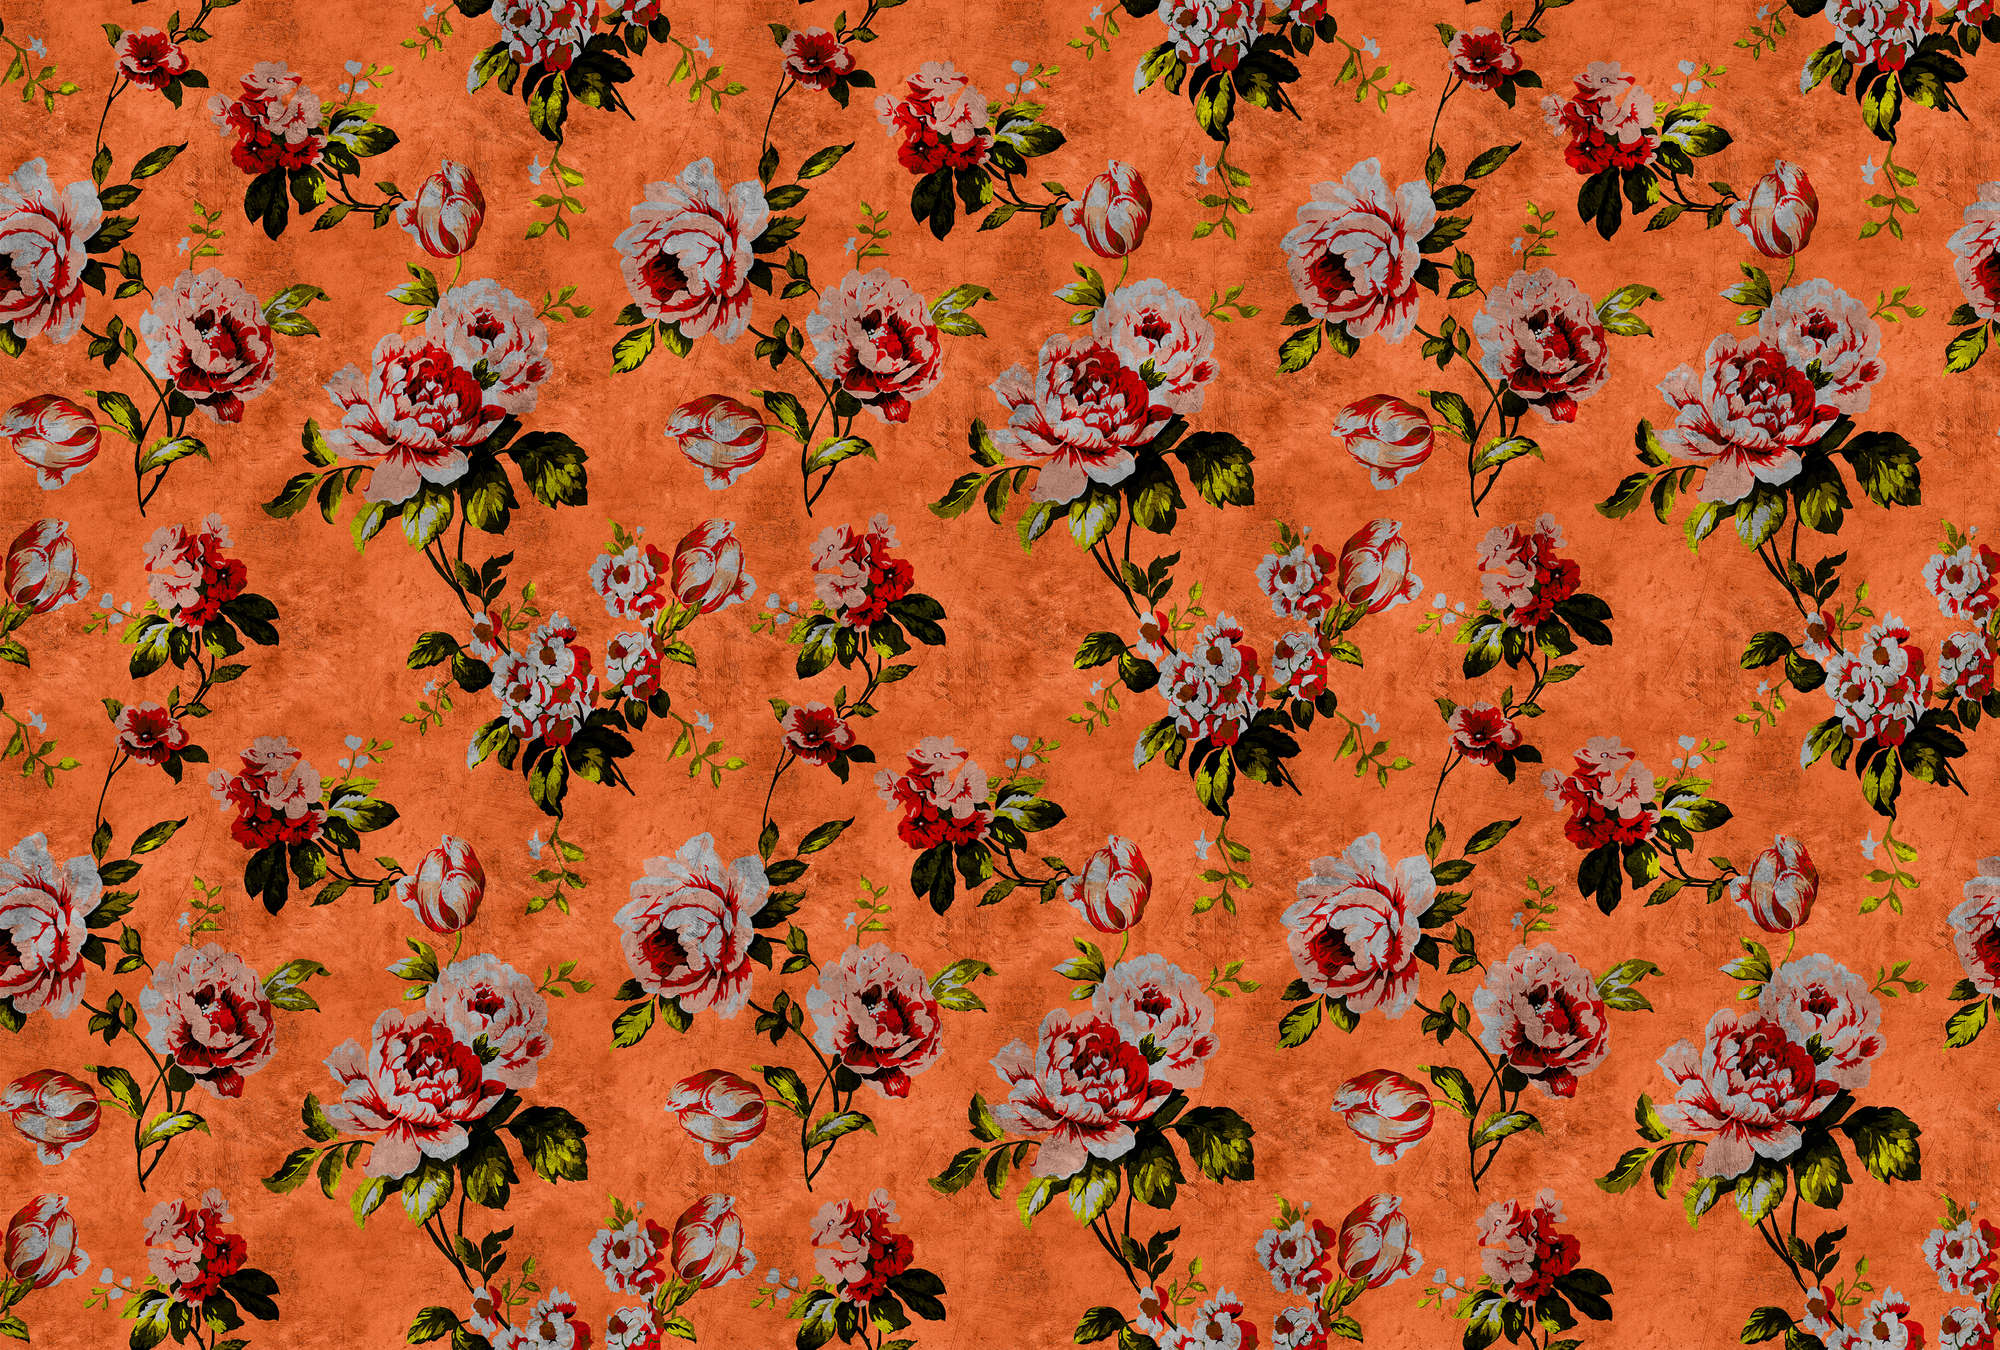             Wild roses 2 - Rosen Fototapete in kratzer Struktur im Retrolook, Orange – Gelb, Orange | Premium Glattvlies
        